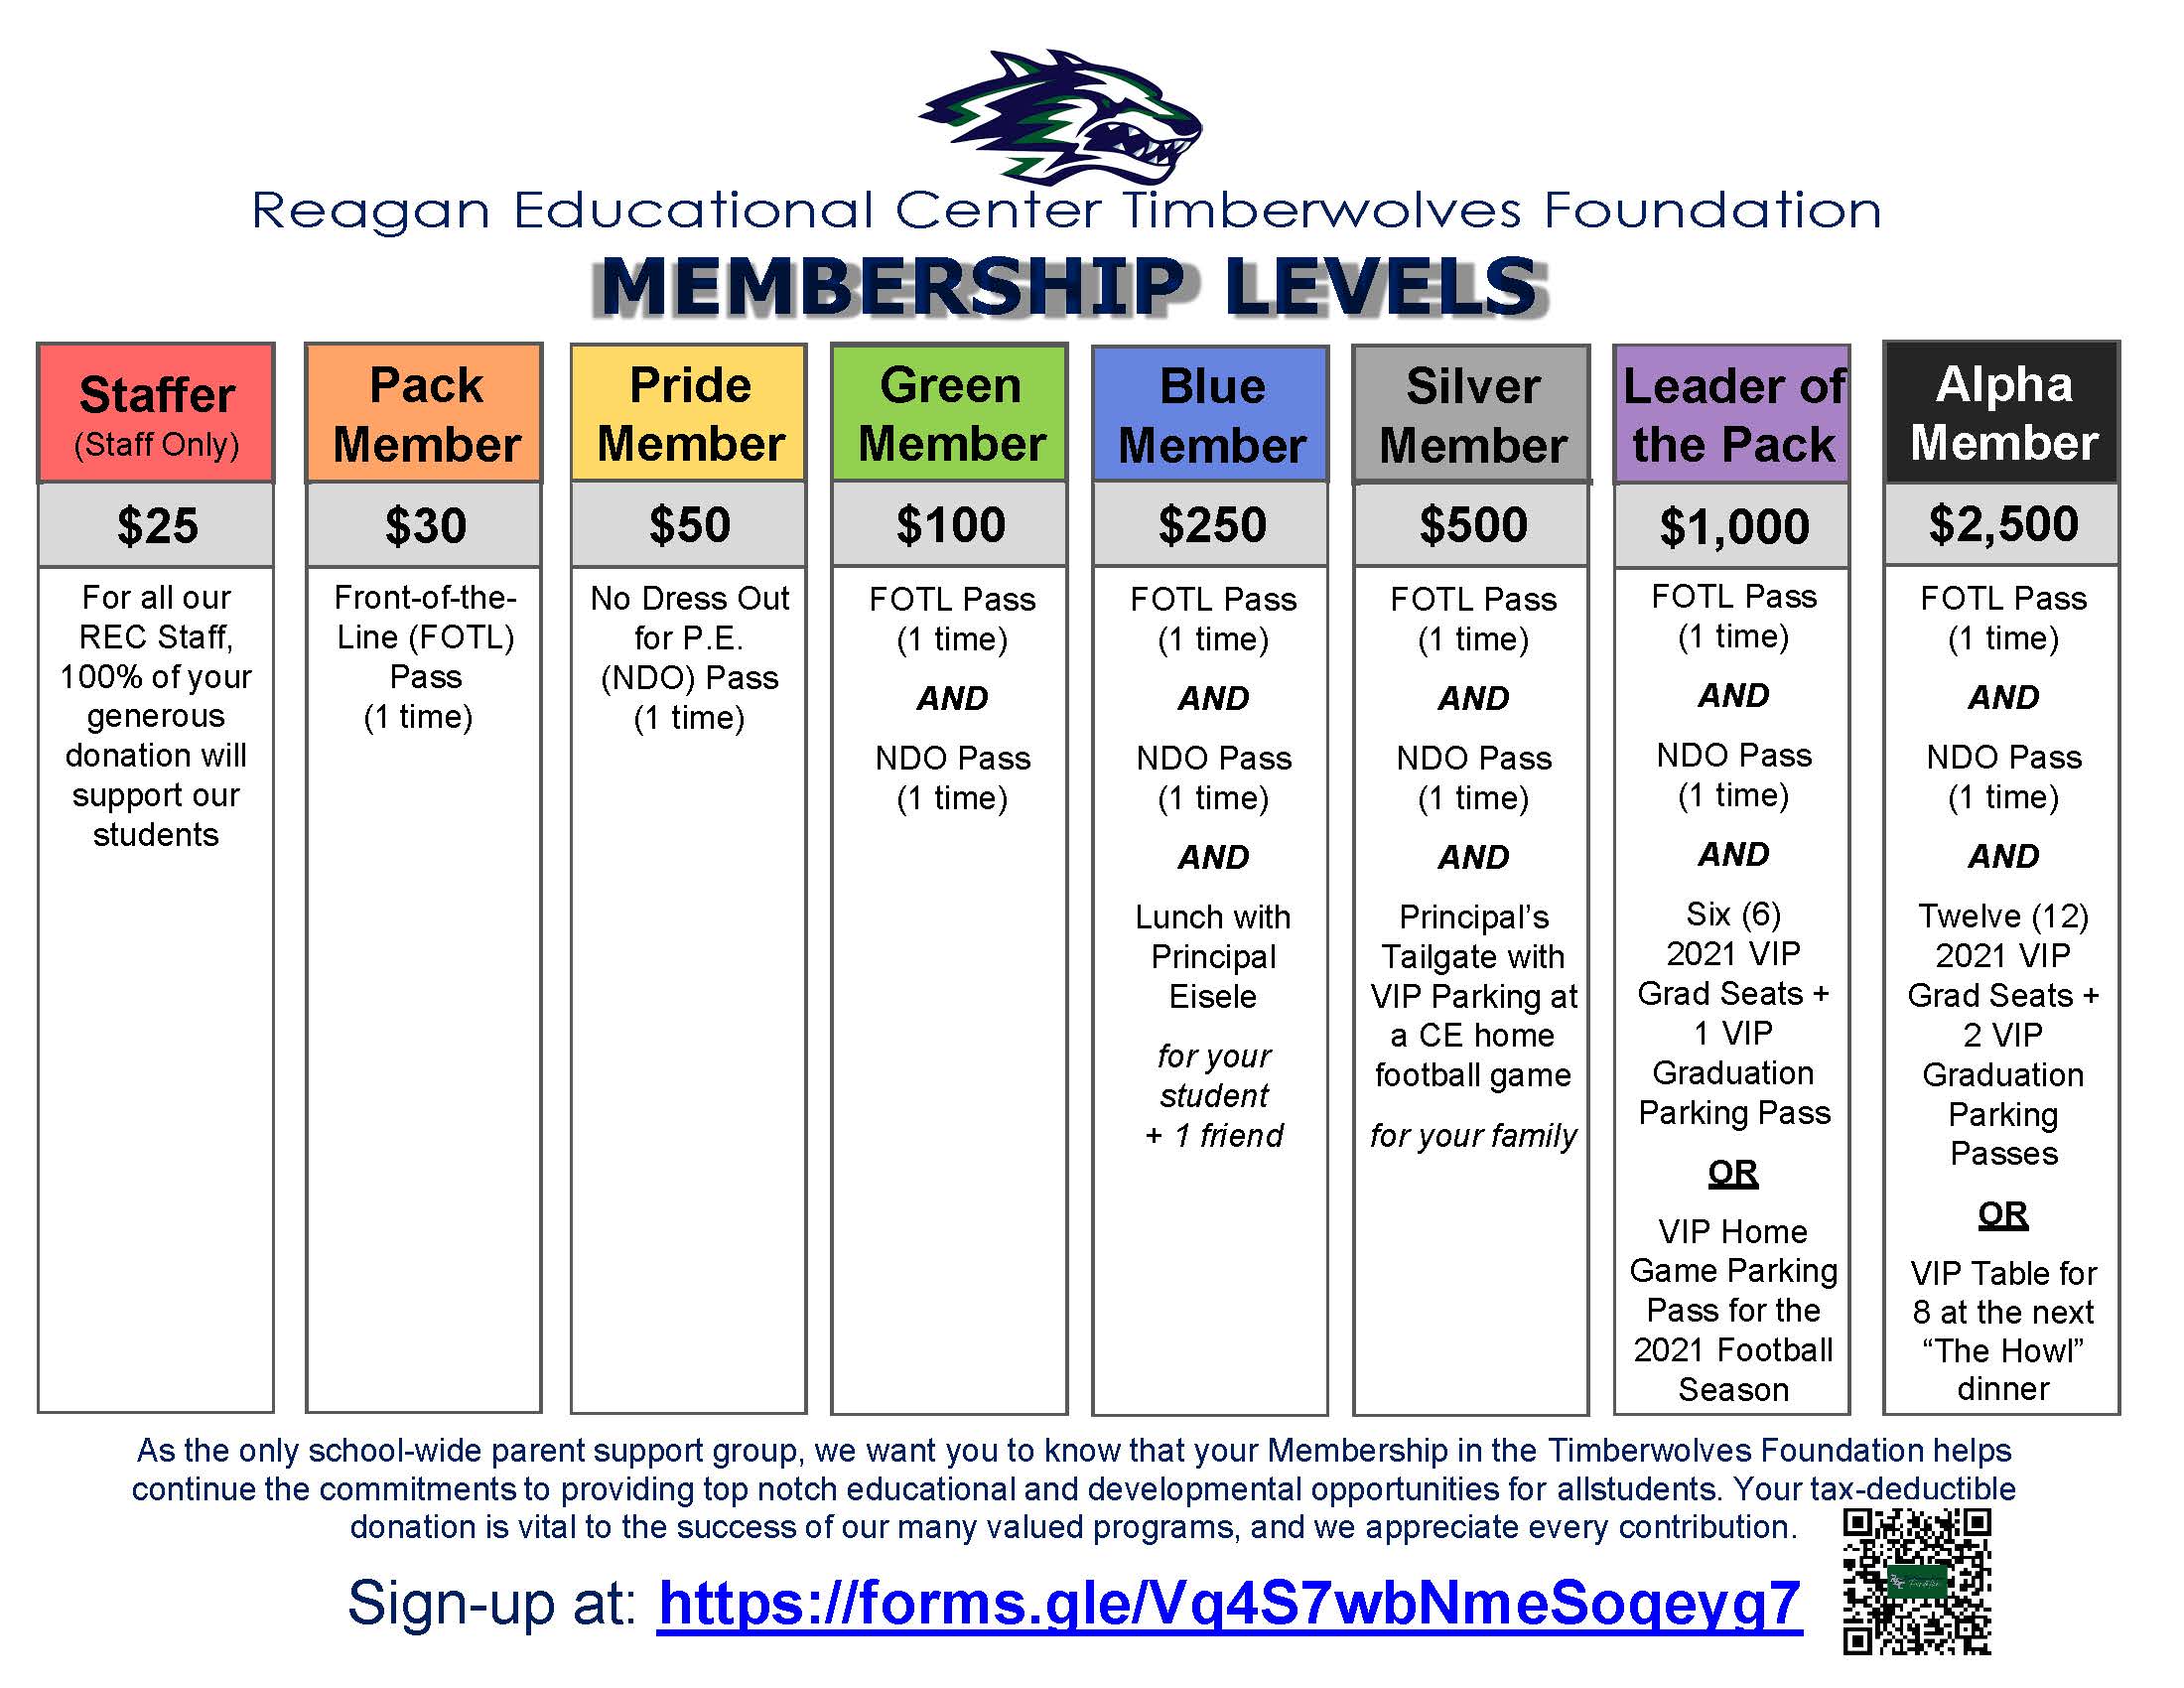 Foundation membership levels